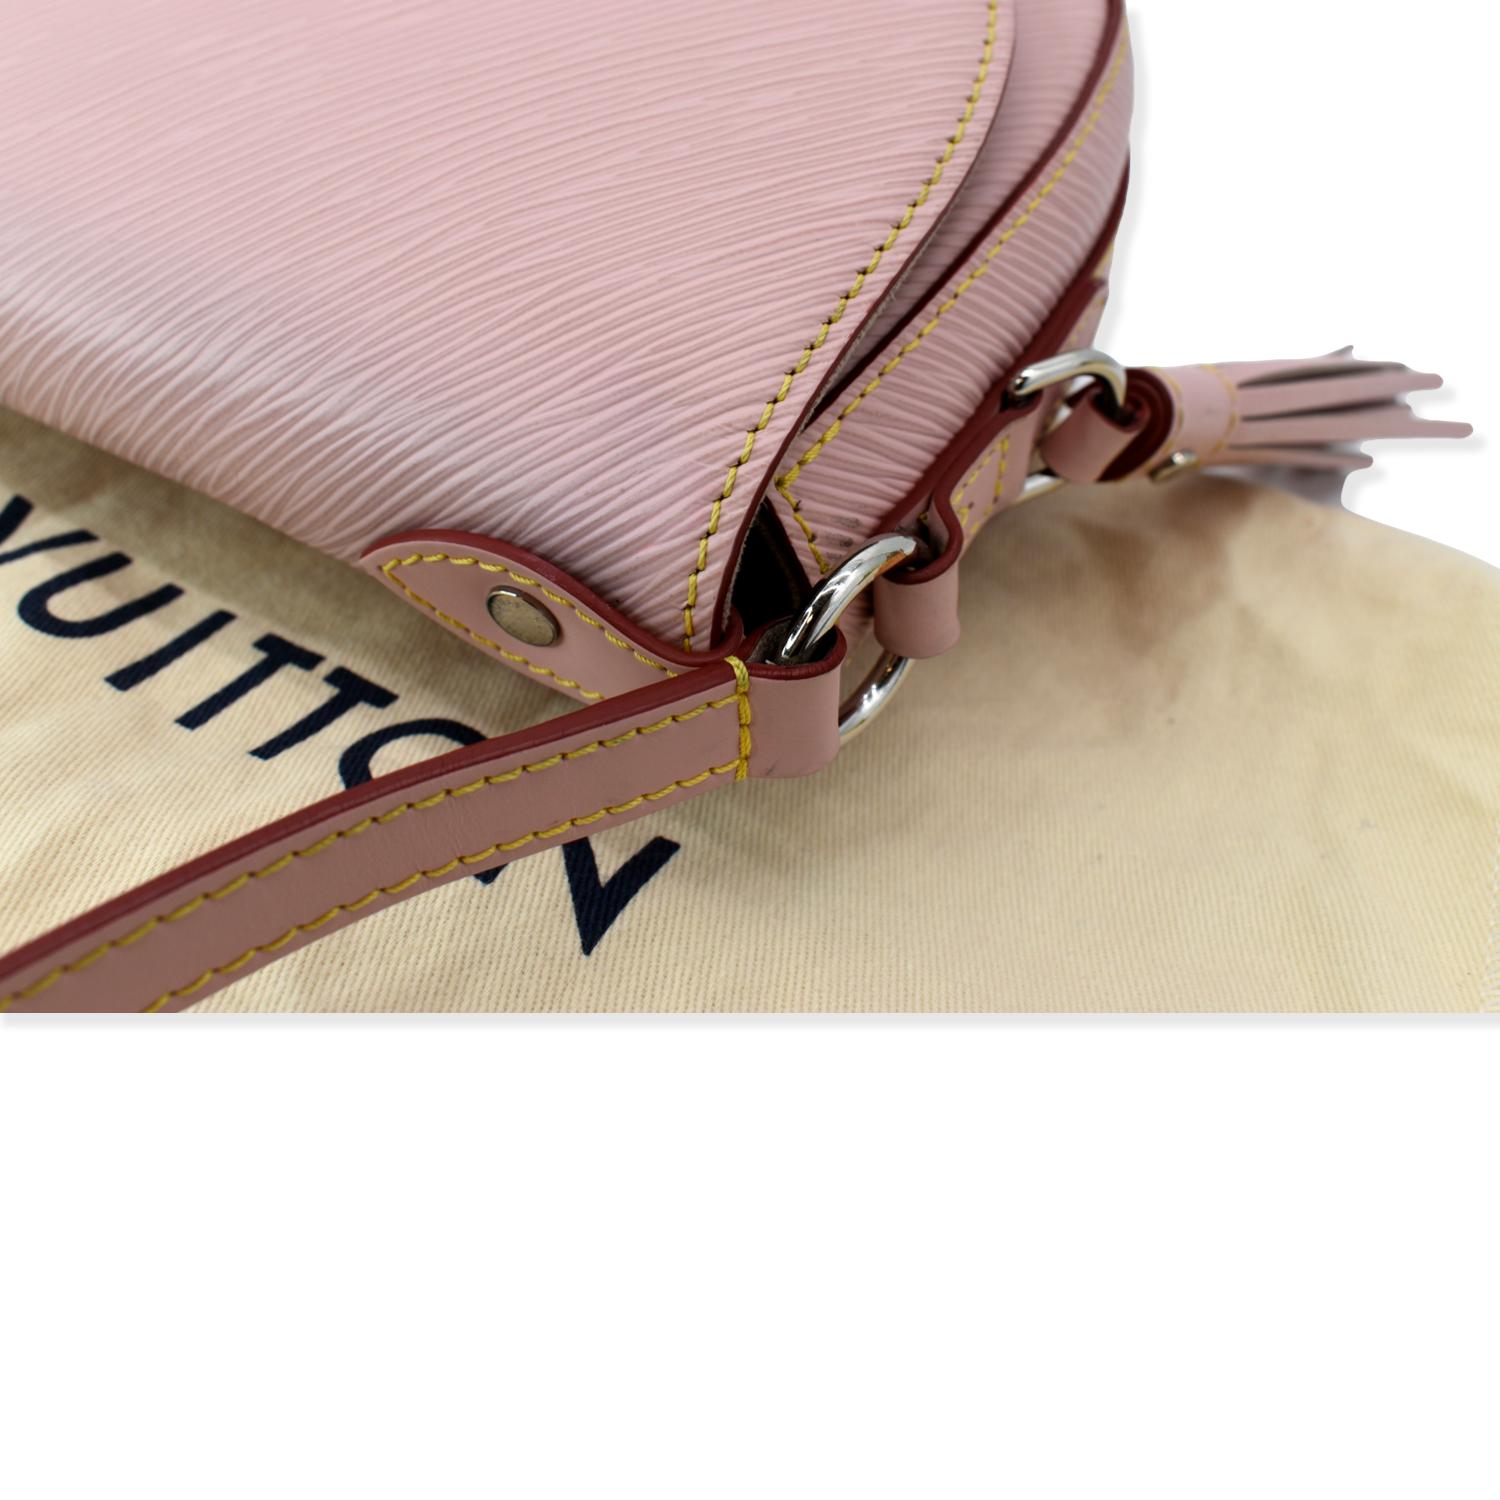 Louis Vuitton Cherrywood Monogram Leather Wallet